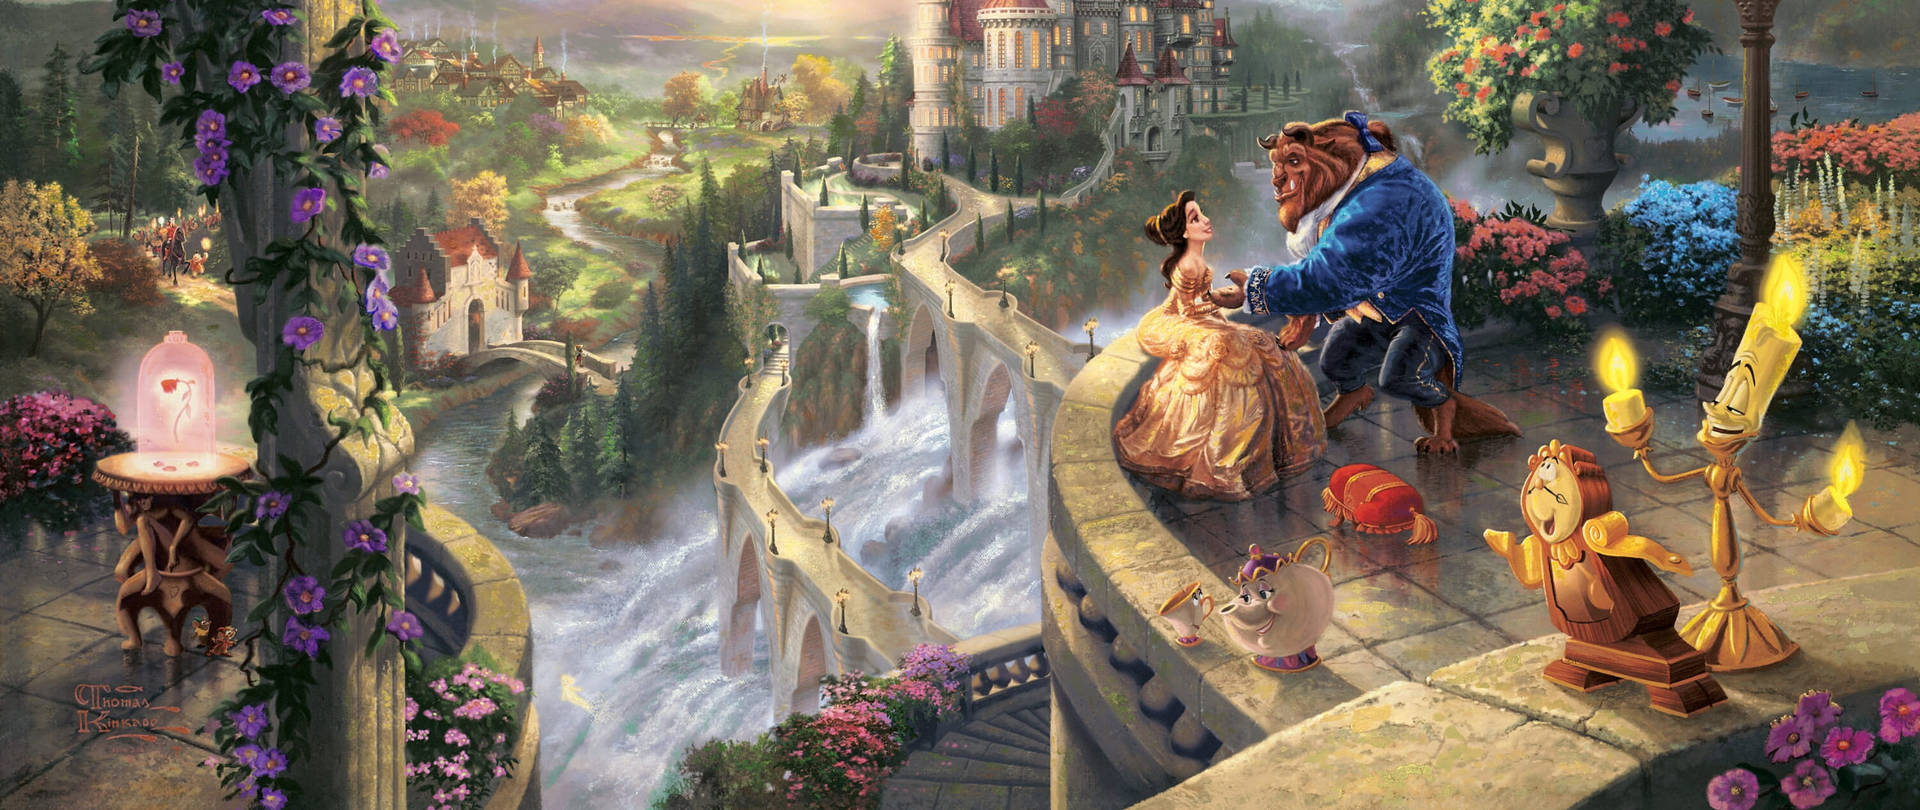 Belle In Disney Castle Background